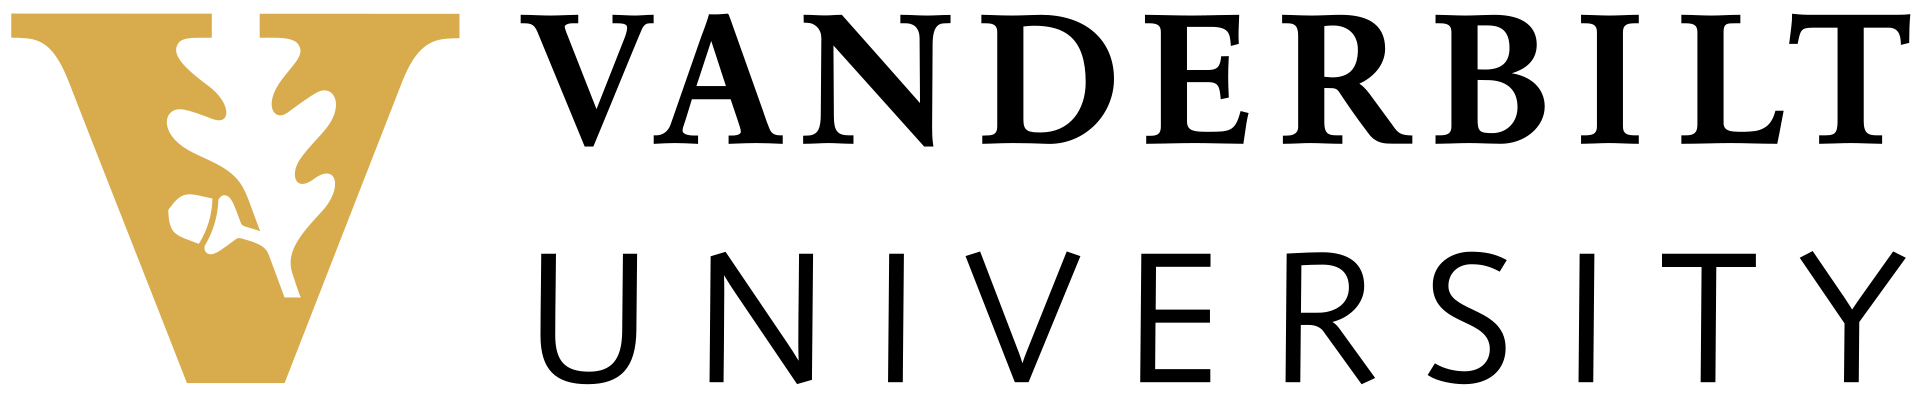 Vanderbilt University logo, By Source, Fair use, https://en.wikipedia.org/w/index.php?curid=13301785